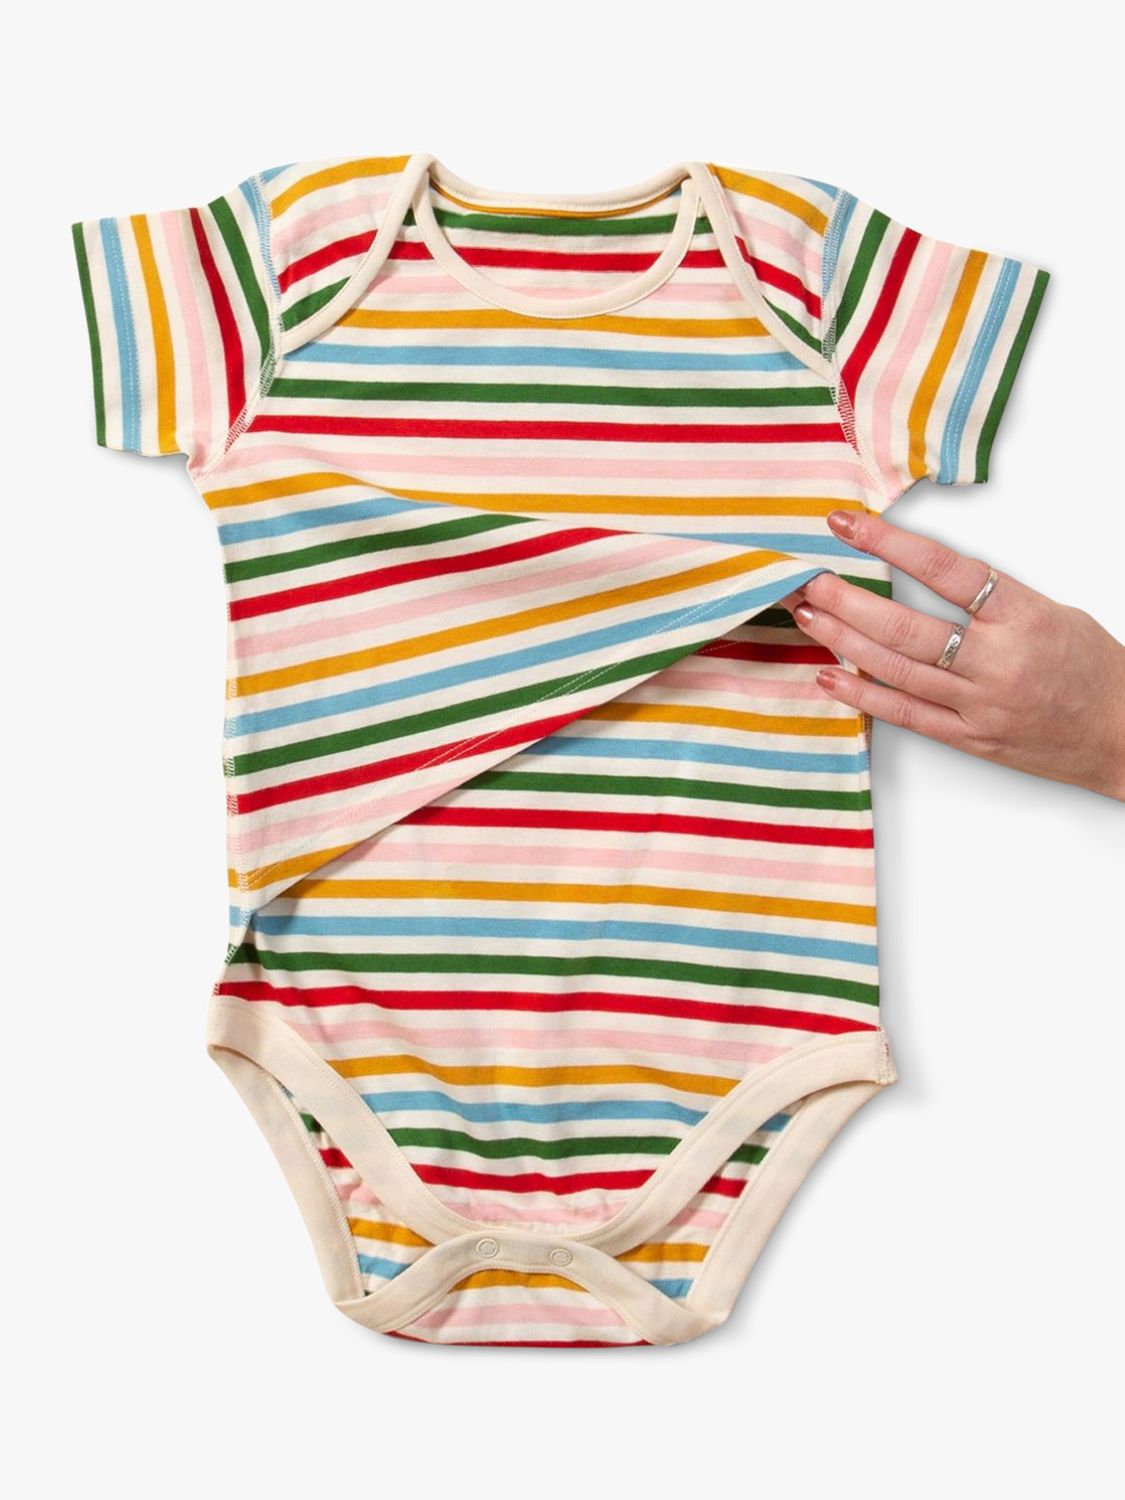 Little Green Radicals Kids' Adaptive Organic Cotton Summer Rainbow Striped Bodysuit, Multi, 18-24 months